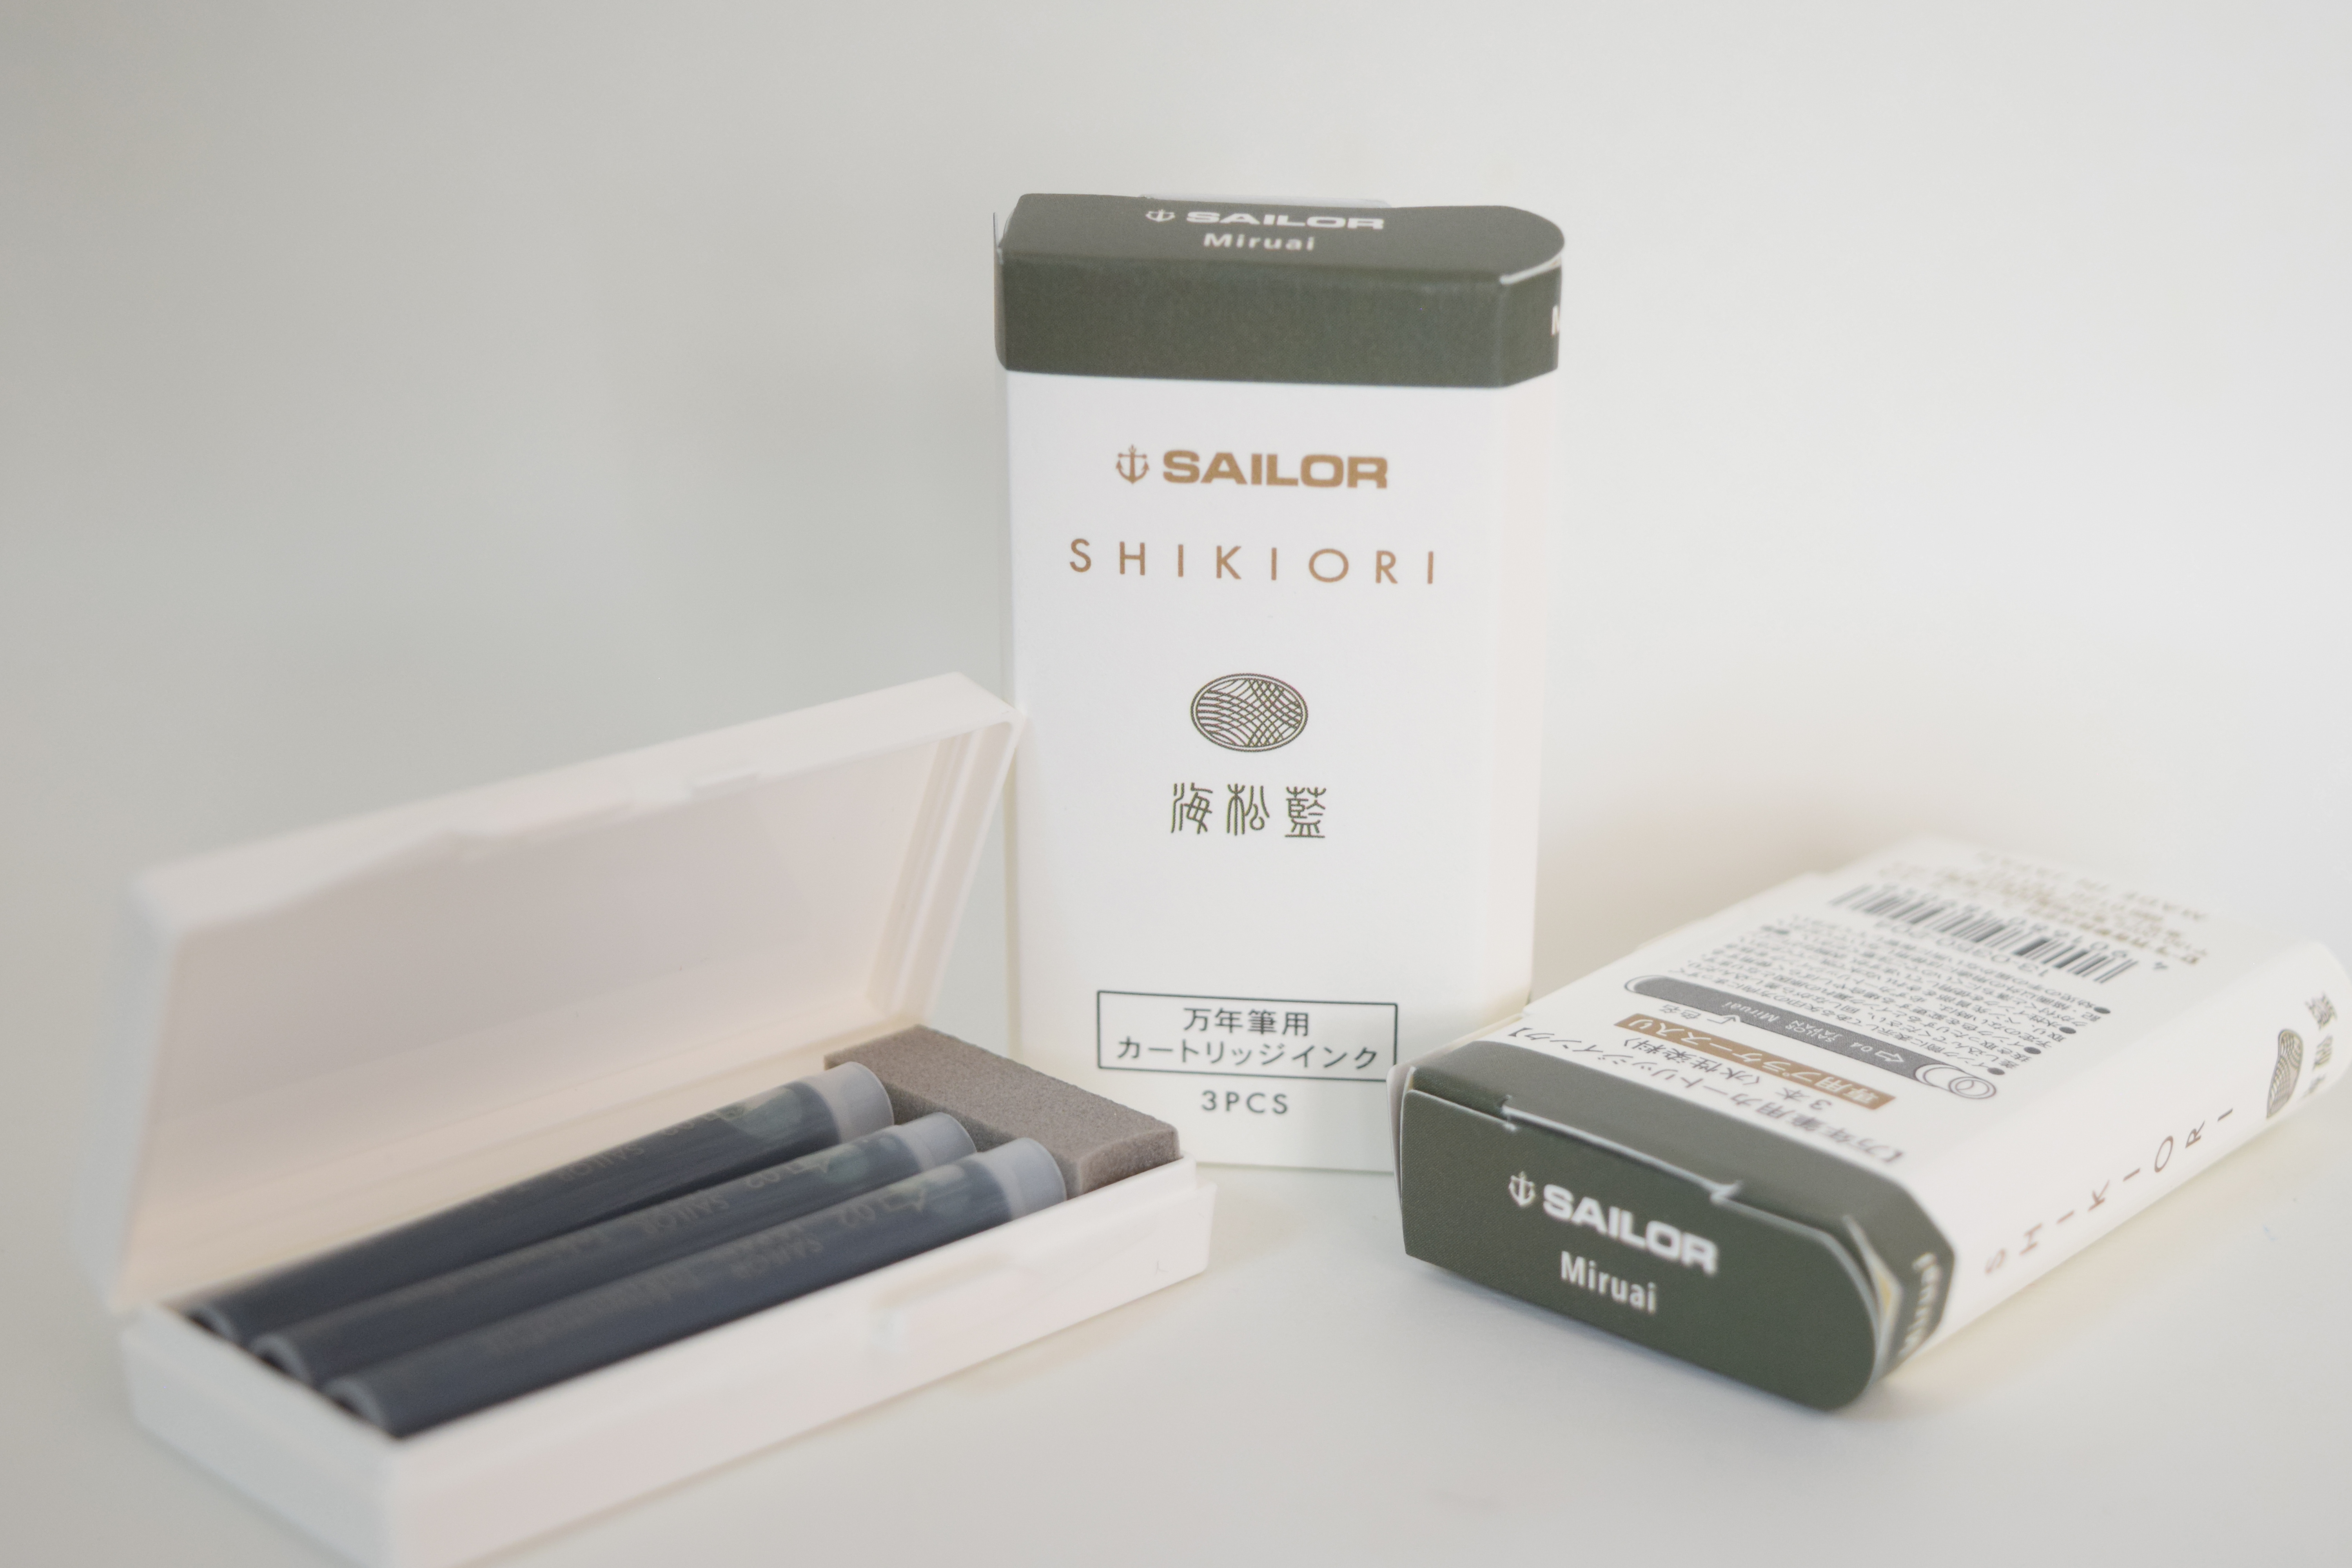 Sailor Shikiori Cartridges - Miruai